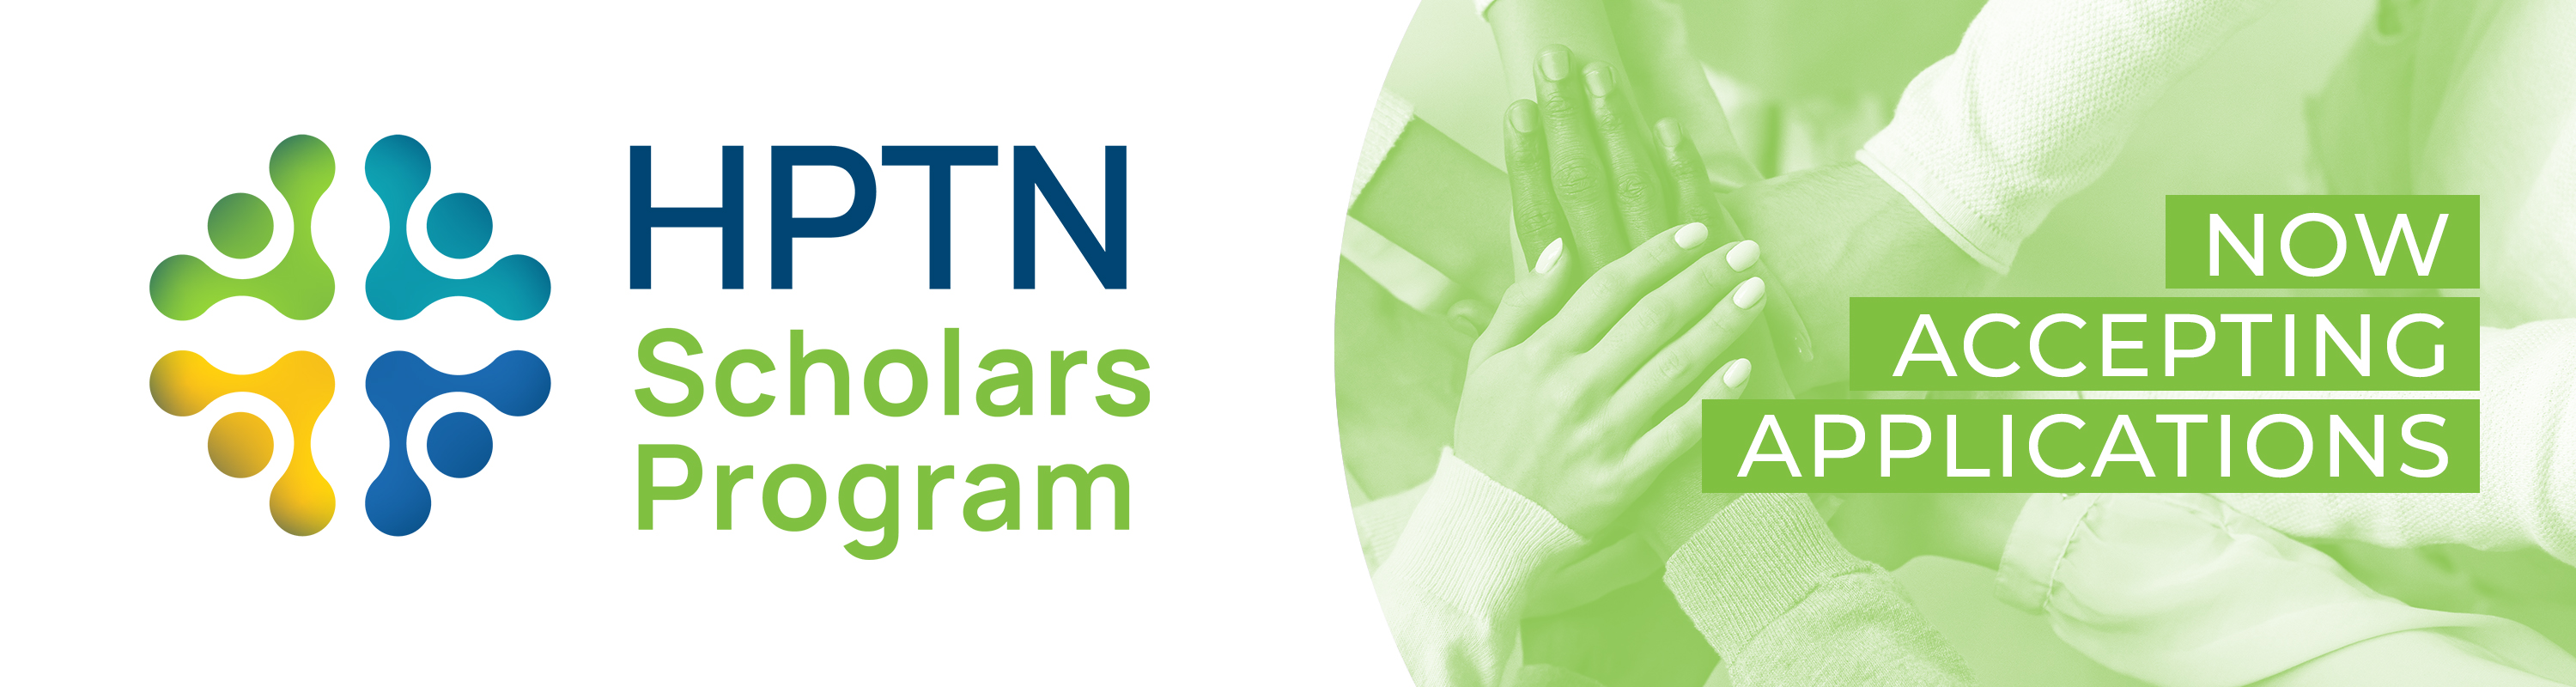 HPTN Scholars Program - Now Accepting Applications